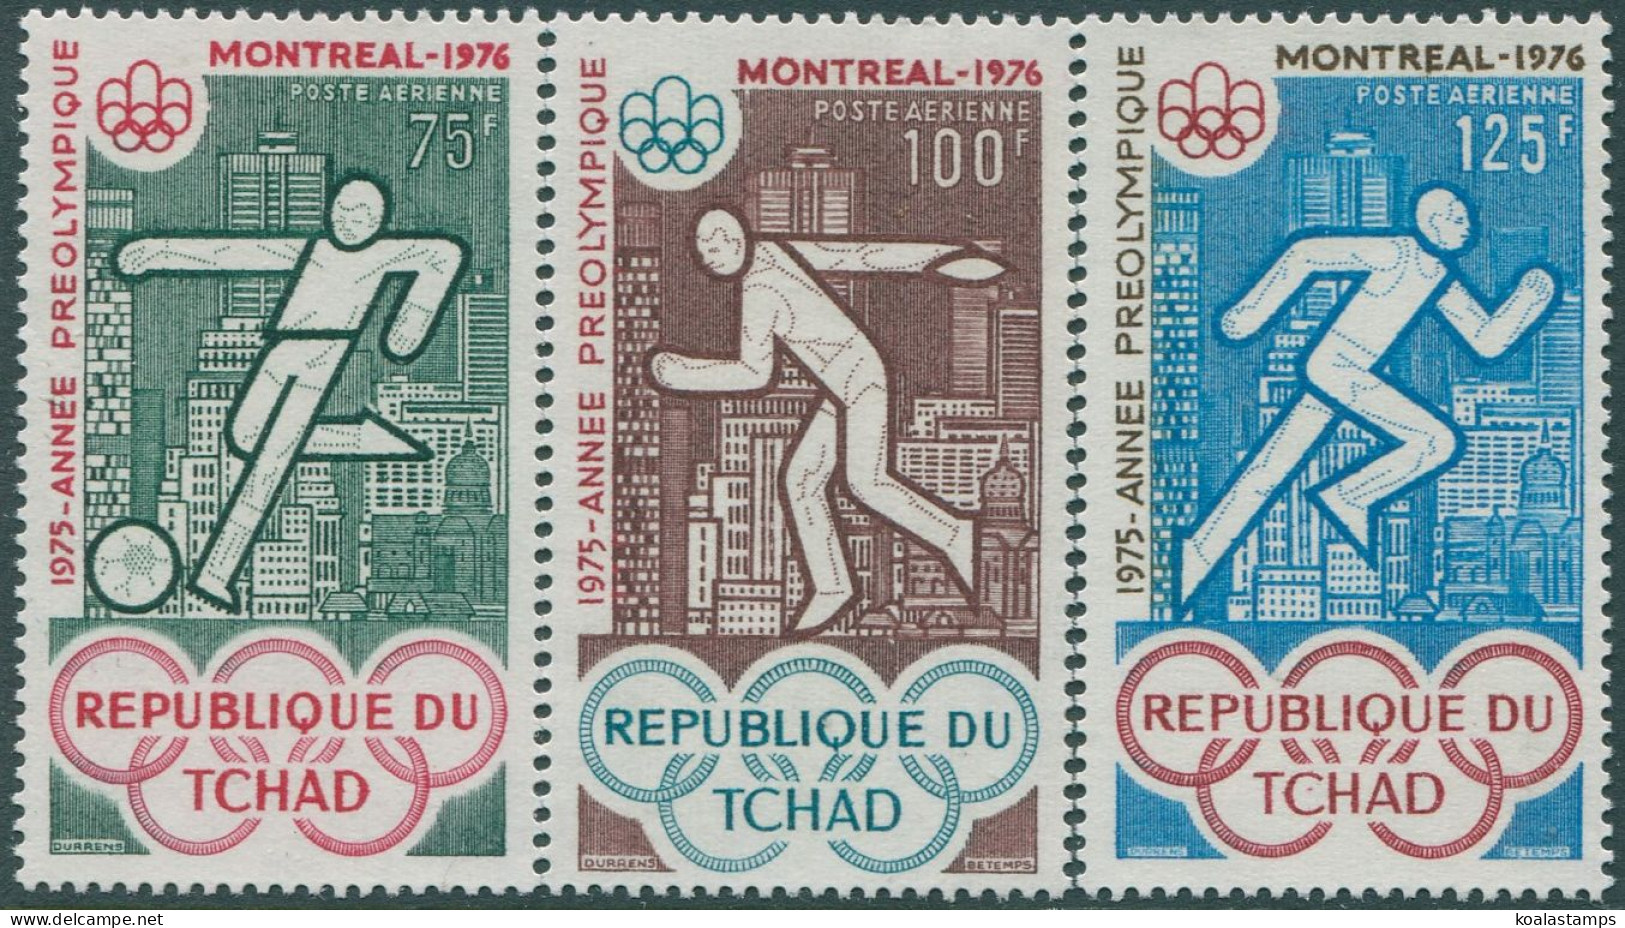 Chad 1975 SG425-427 Olympic Games Set MNH - Tschad (1960-...)